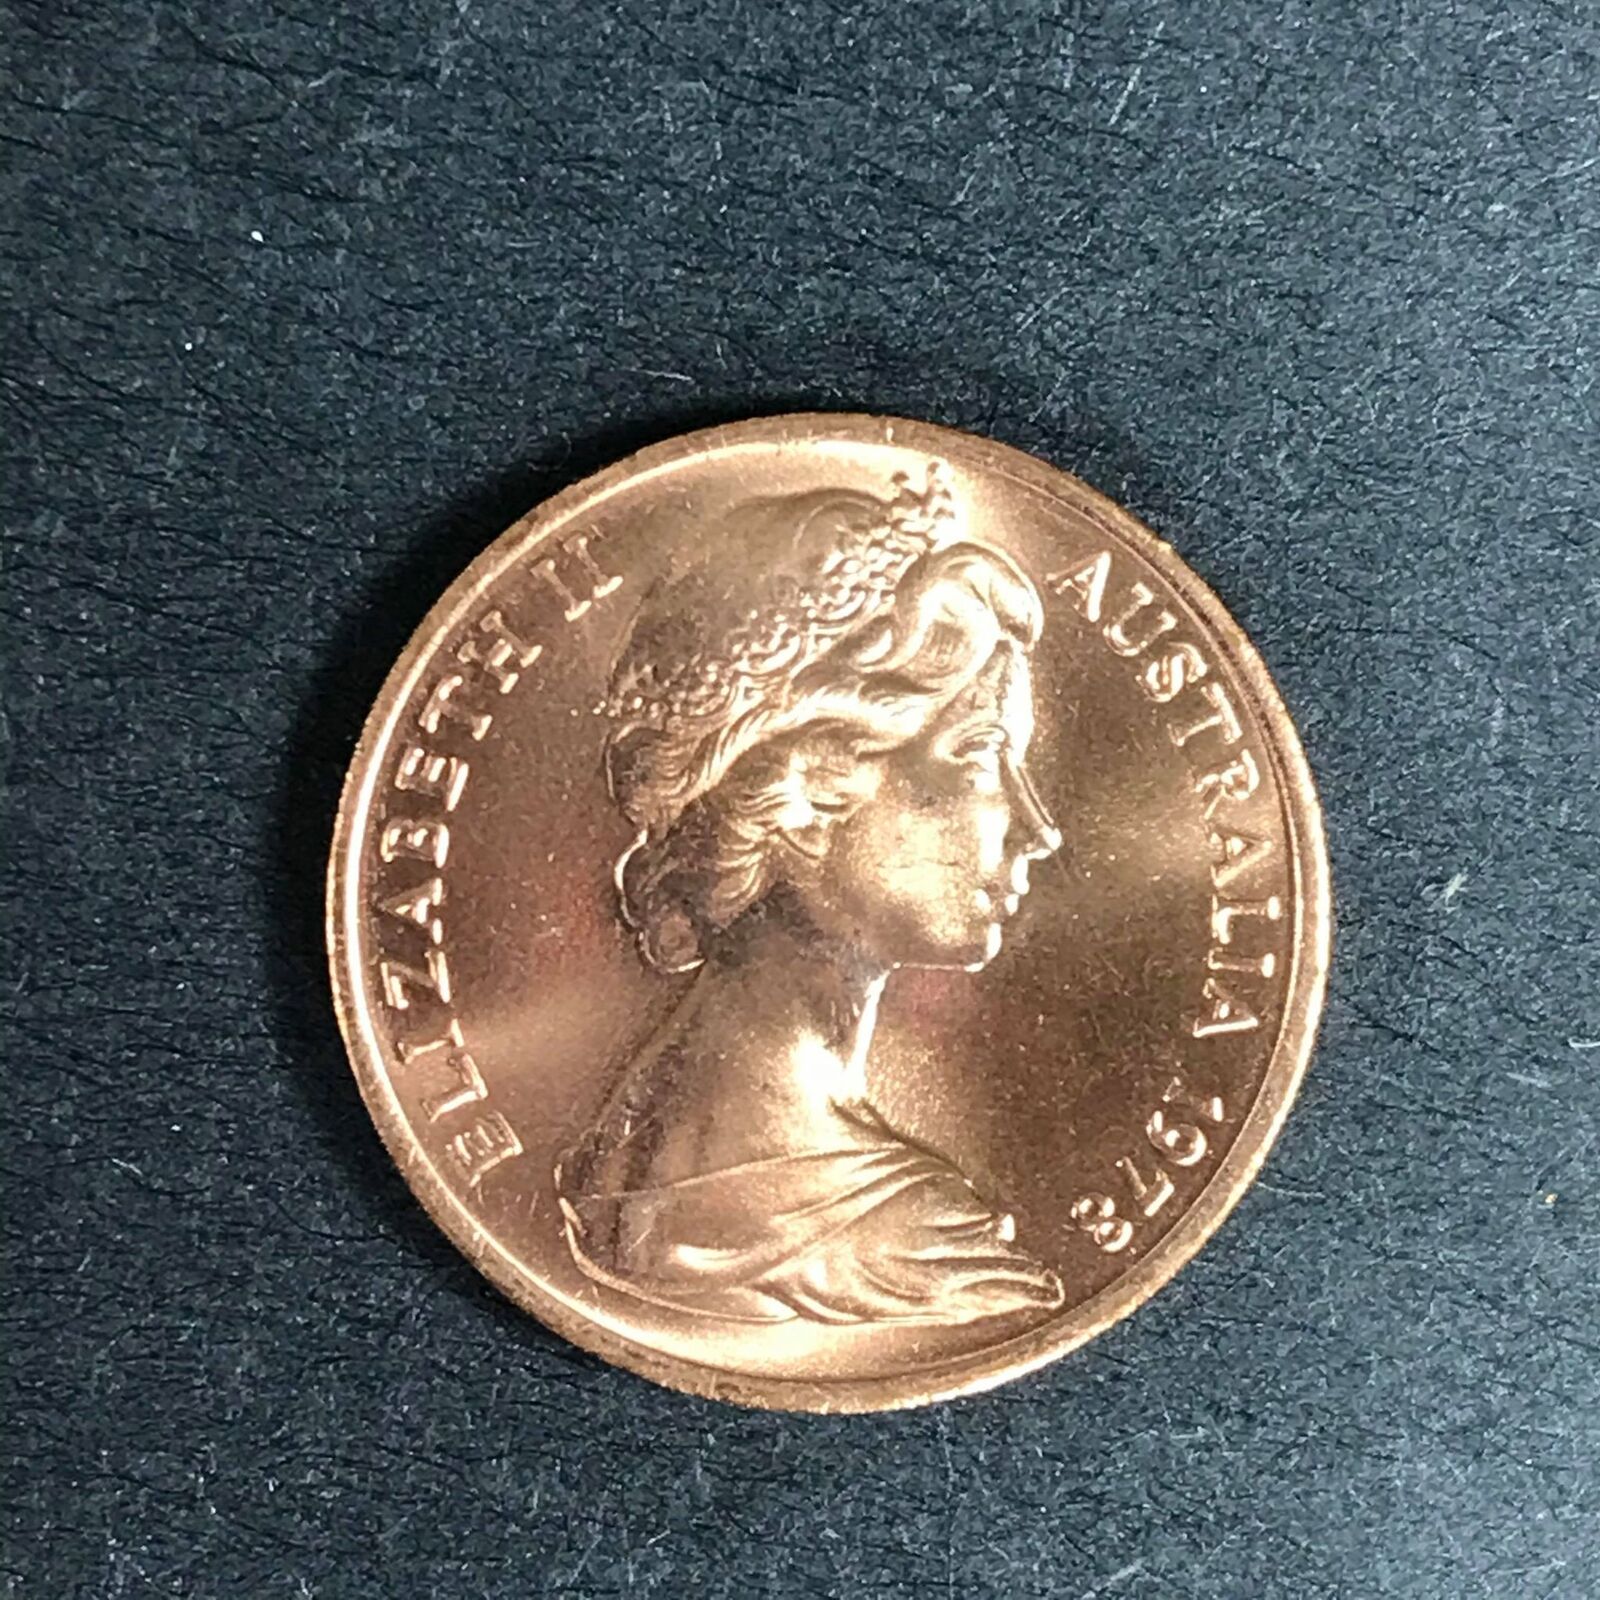 1 x 1978 Uncirculated  1c Royal Australian Mint